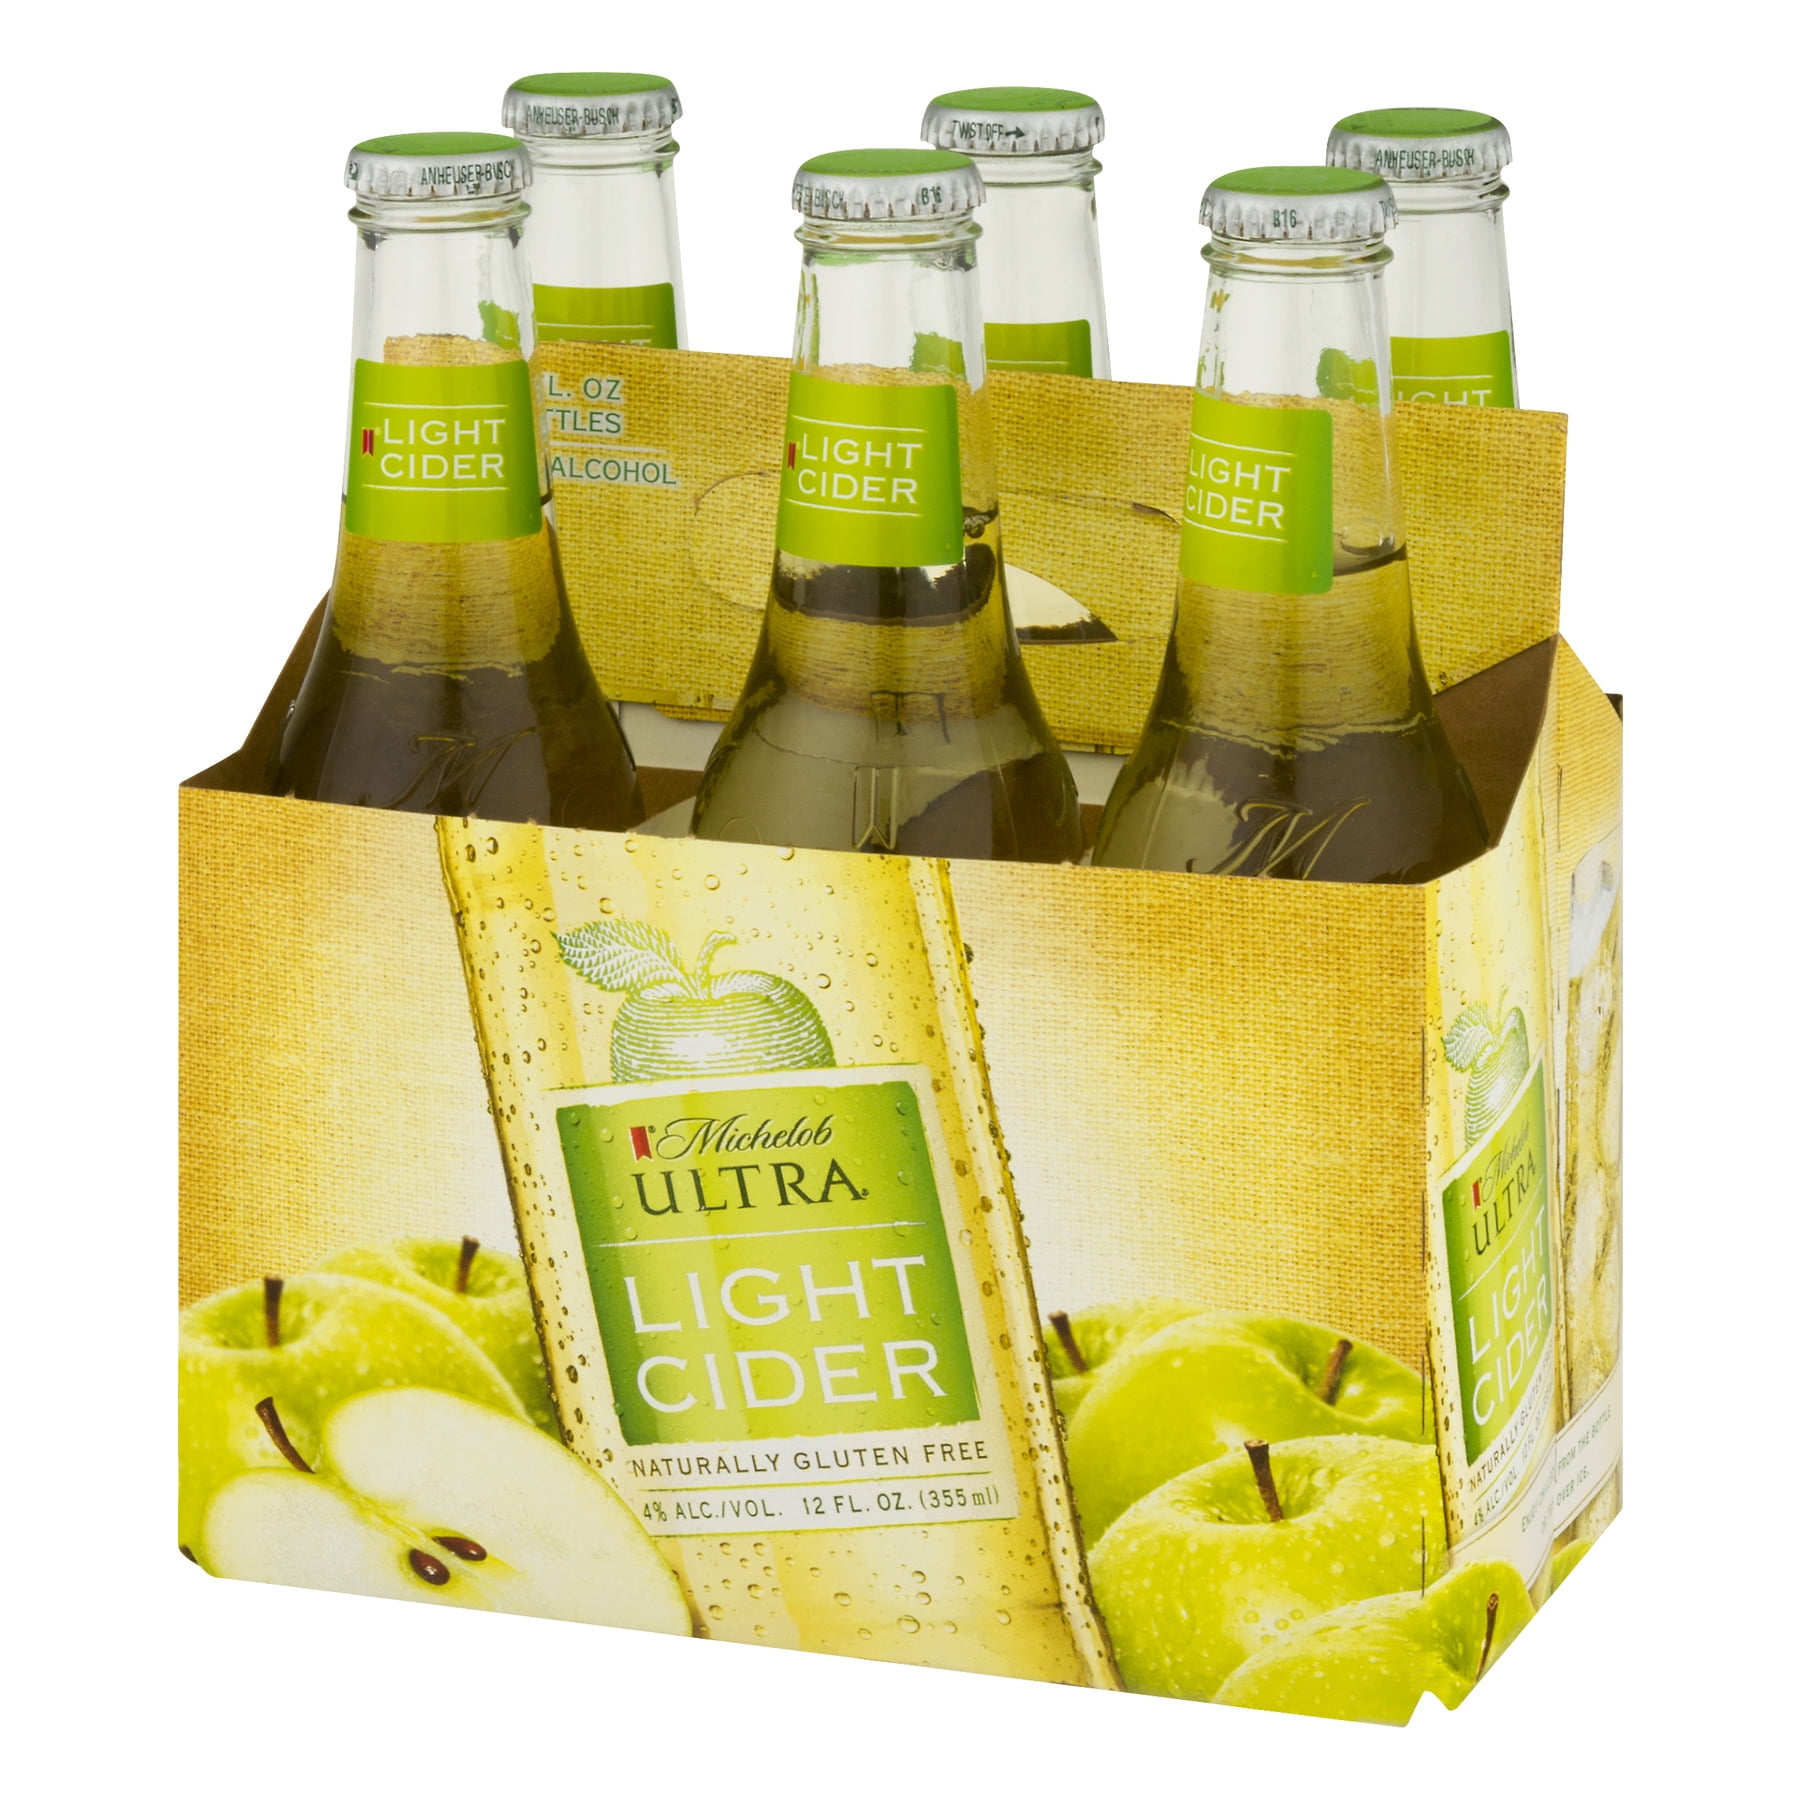 Michelob Ultra Light Cider, 6 Pack, 12 Fl Oz - Walmart.com.